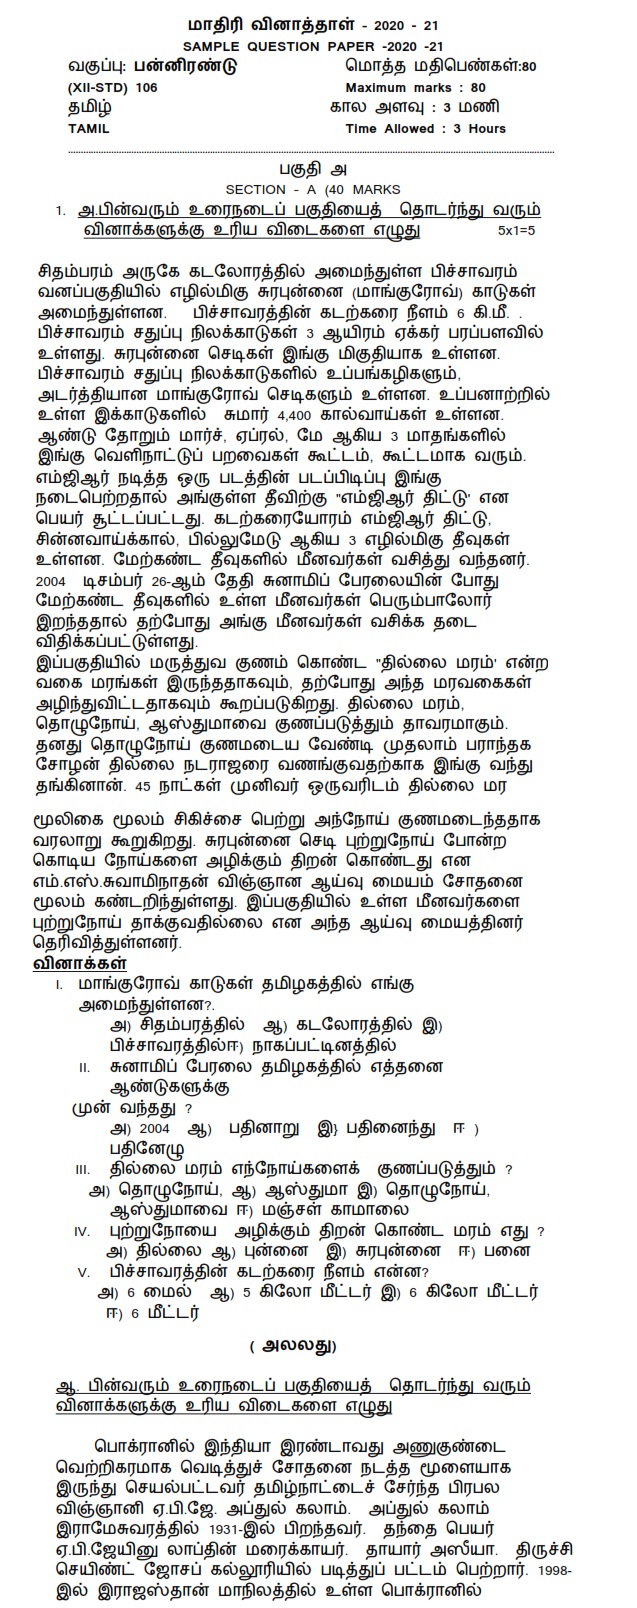 (Download) CBSE Class-12 Sample Paper 2020-21: Tamil | CBSE EXAM PORTAL